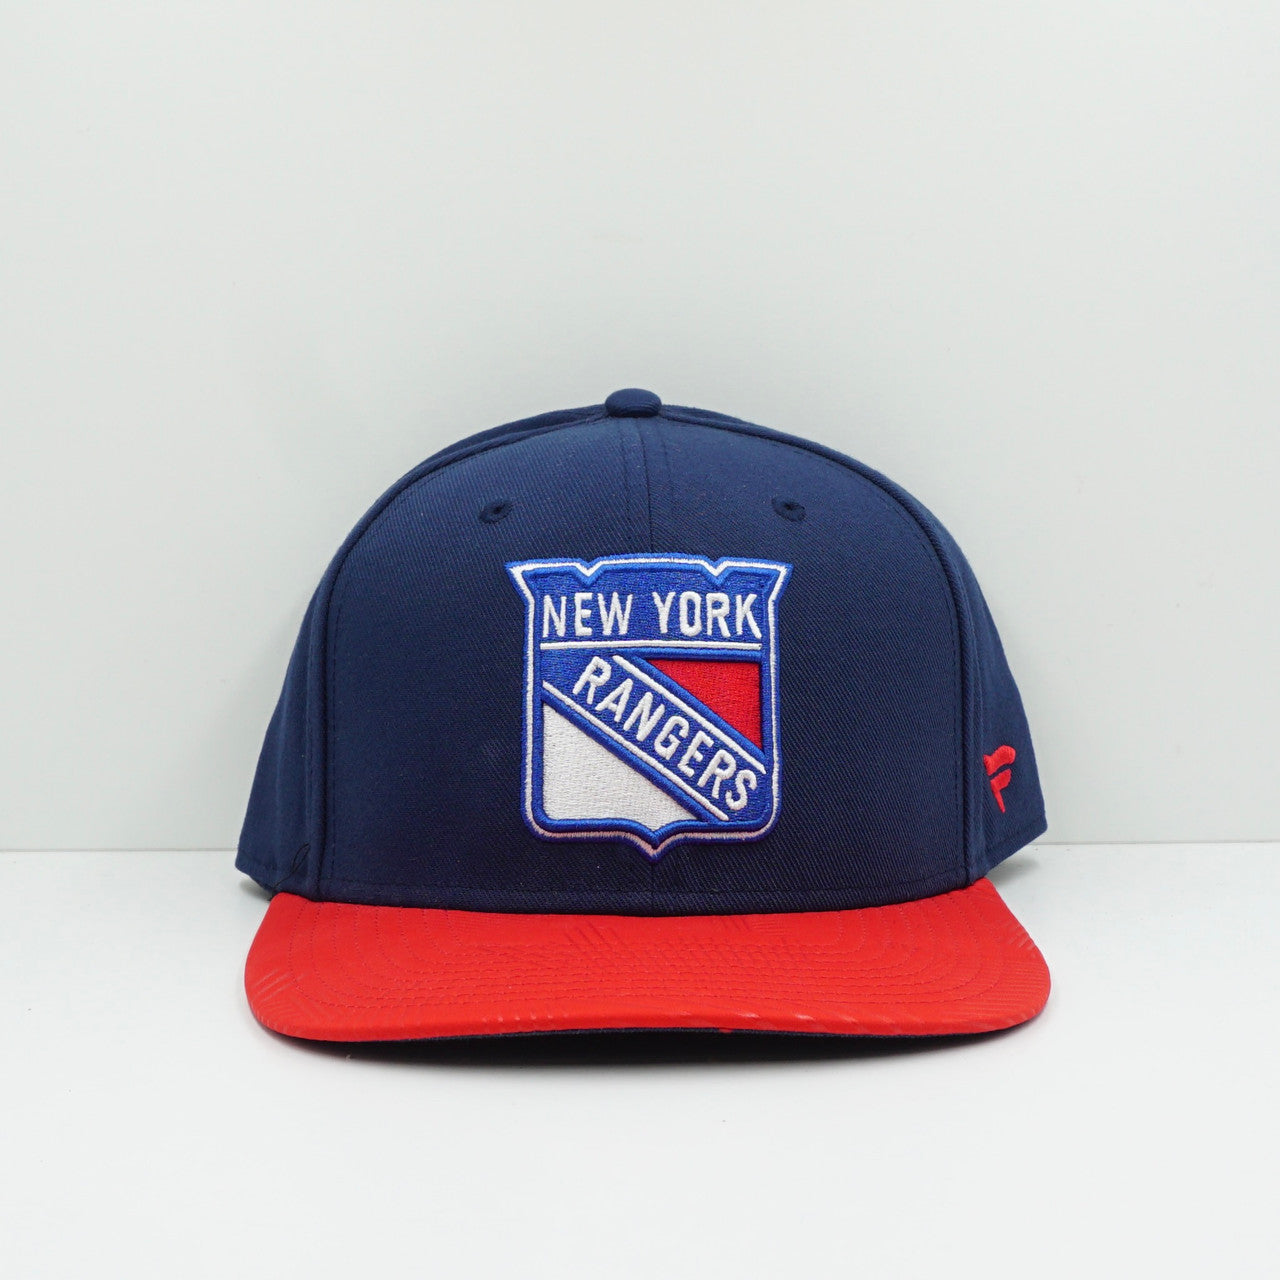 Fanatics New York Rangers Snapback Cap